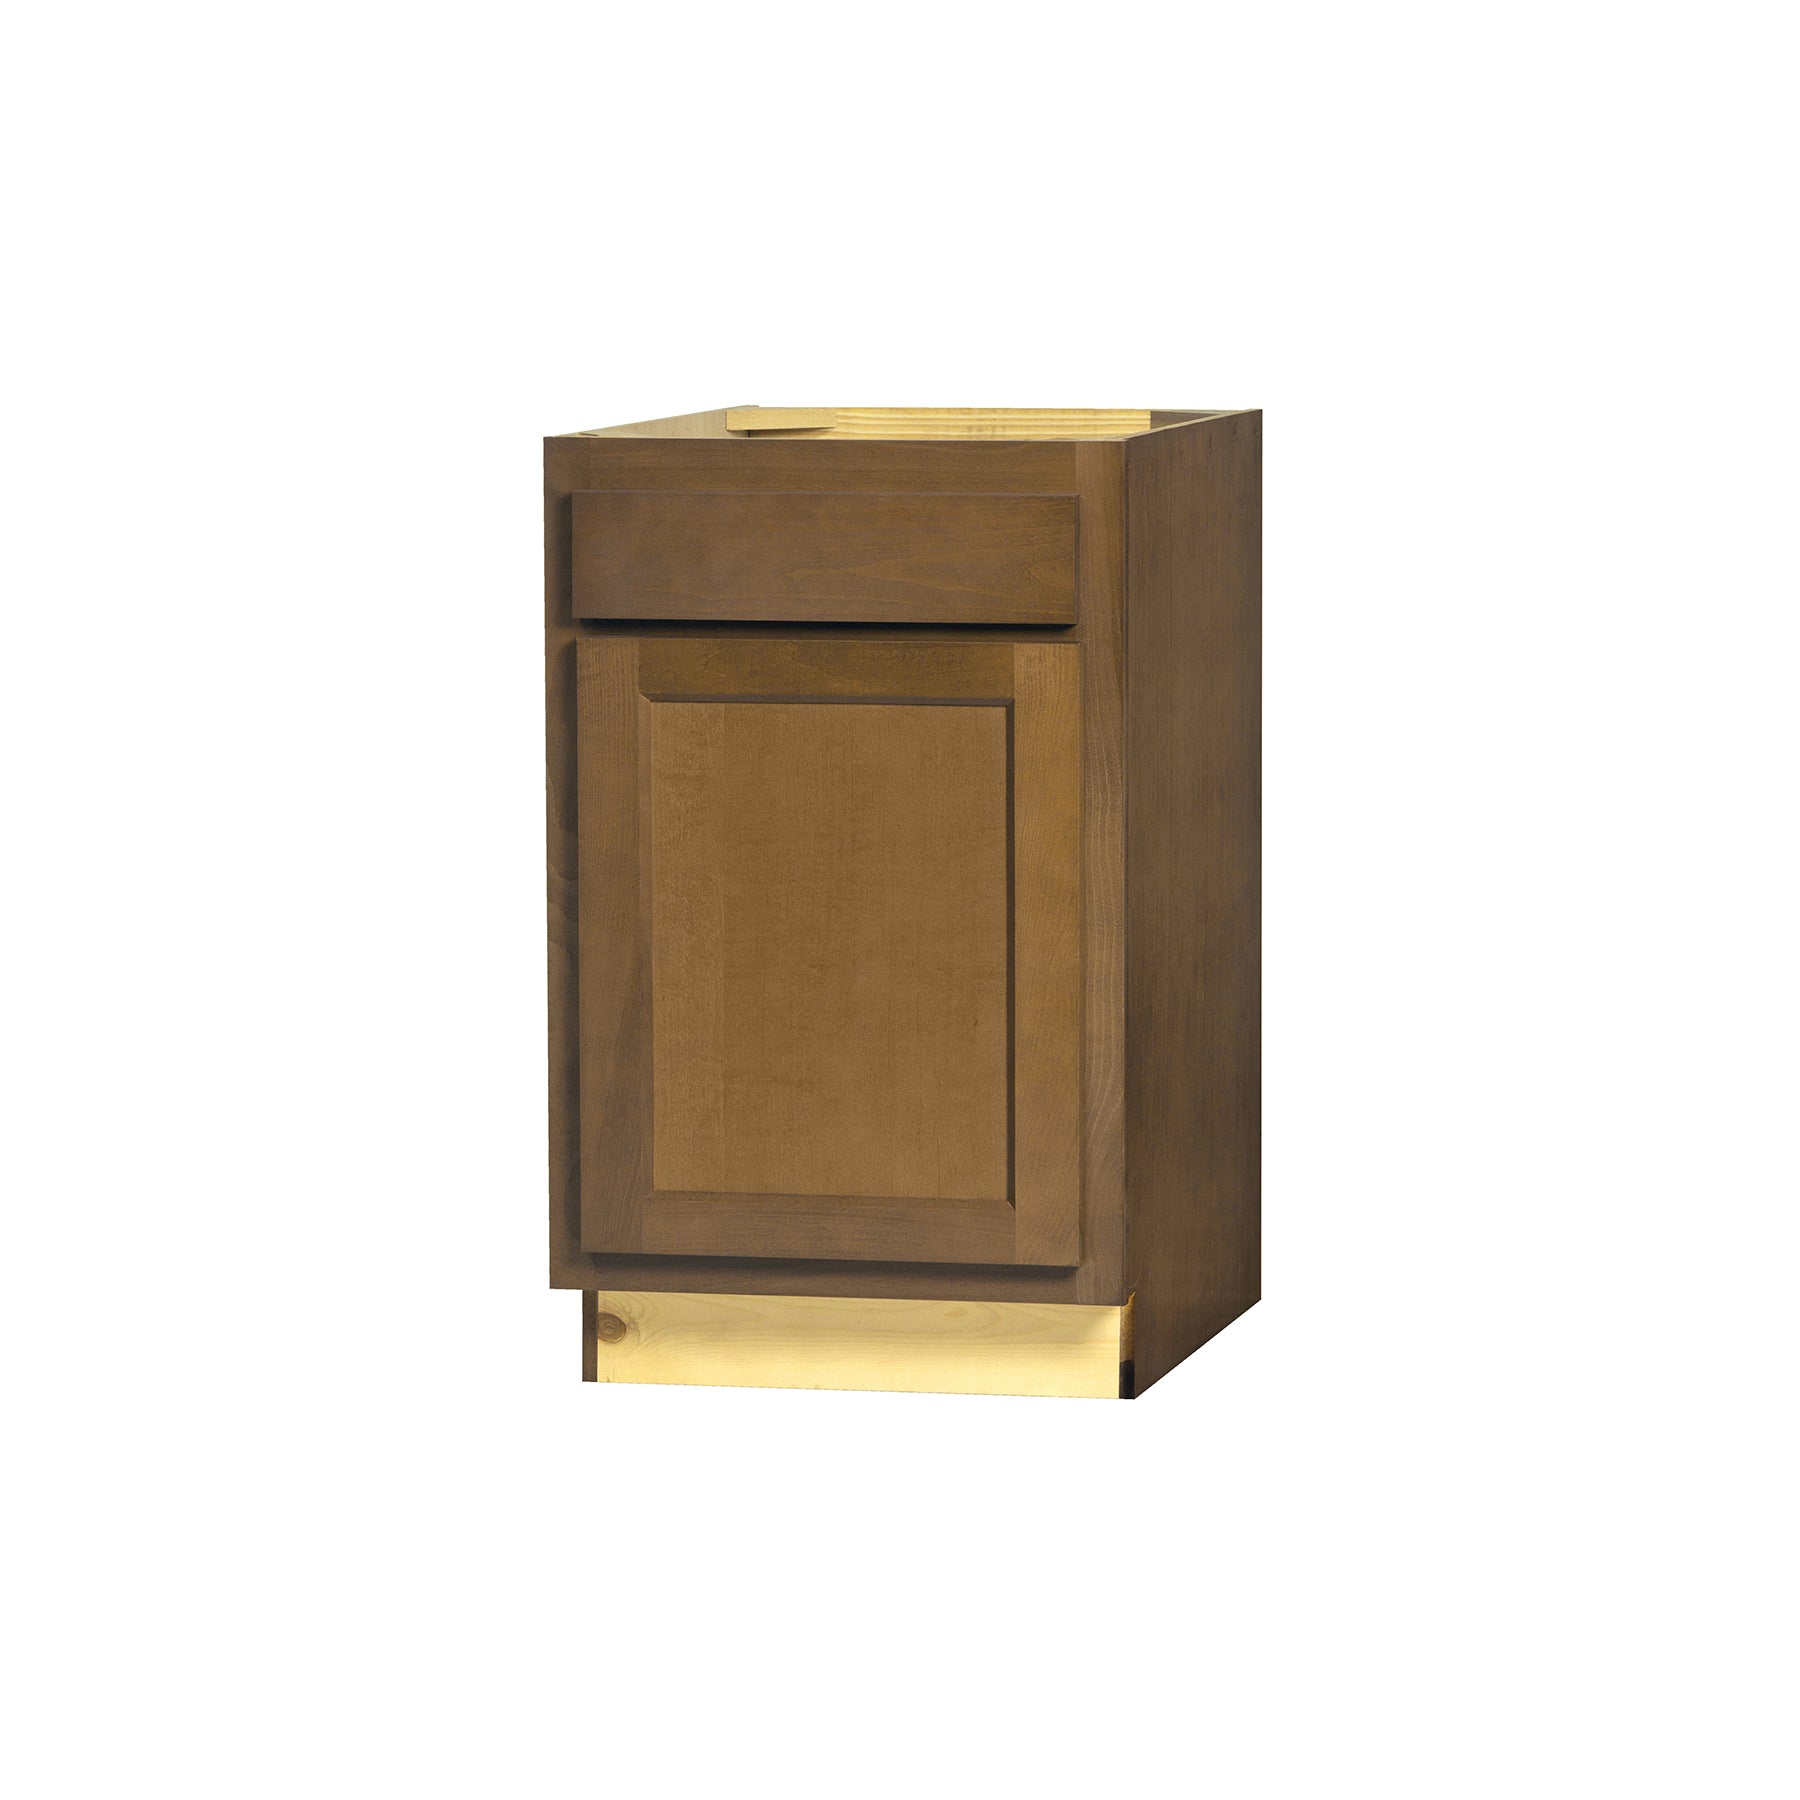 21 Inch Base Cabinets - Warmwood Shaker - 21 Inch W x 24 Inch D x 34.5 Inch H